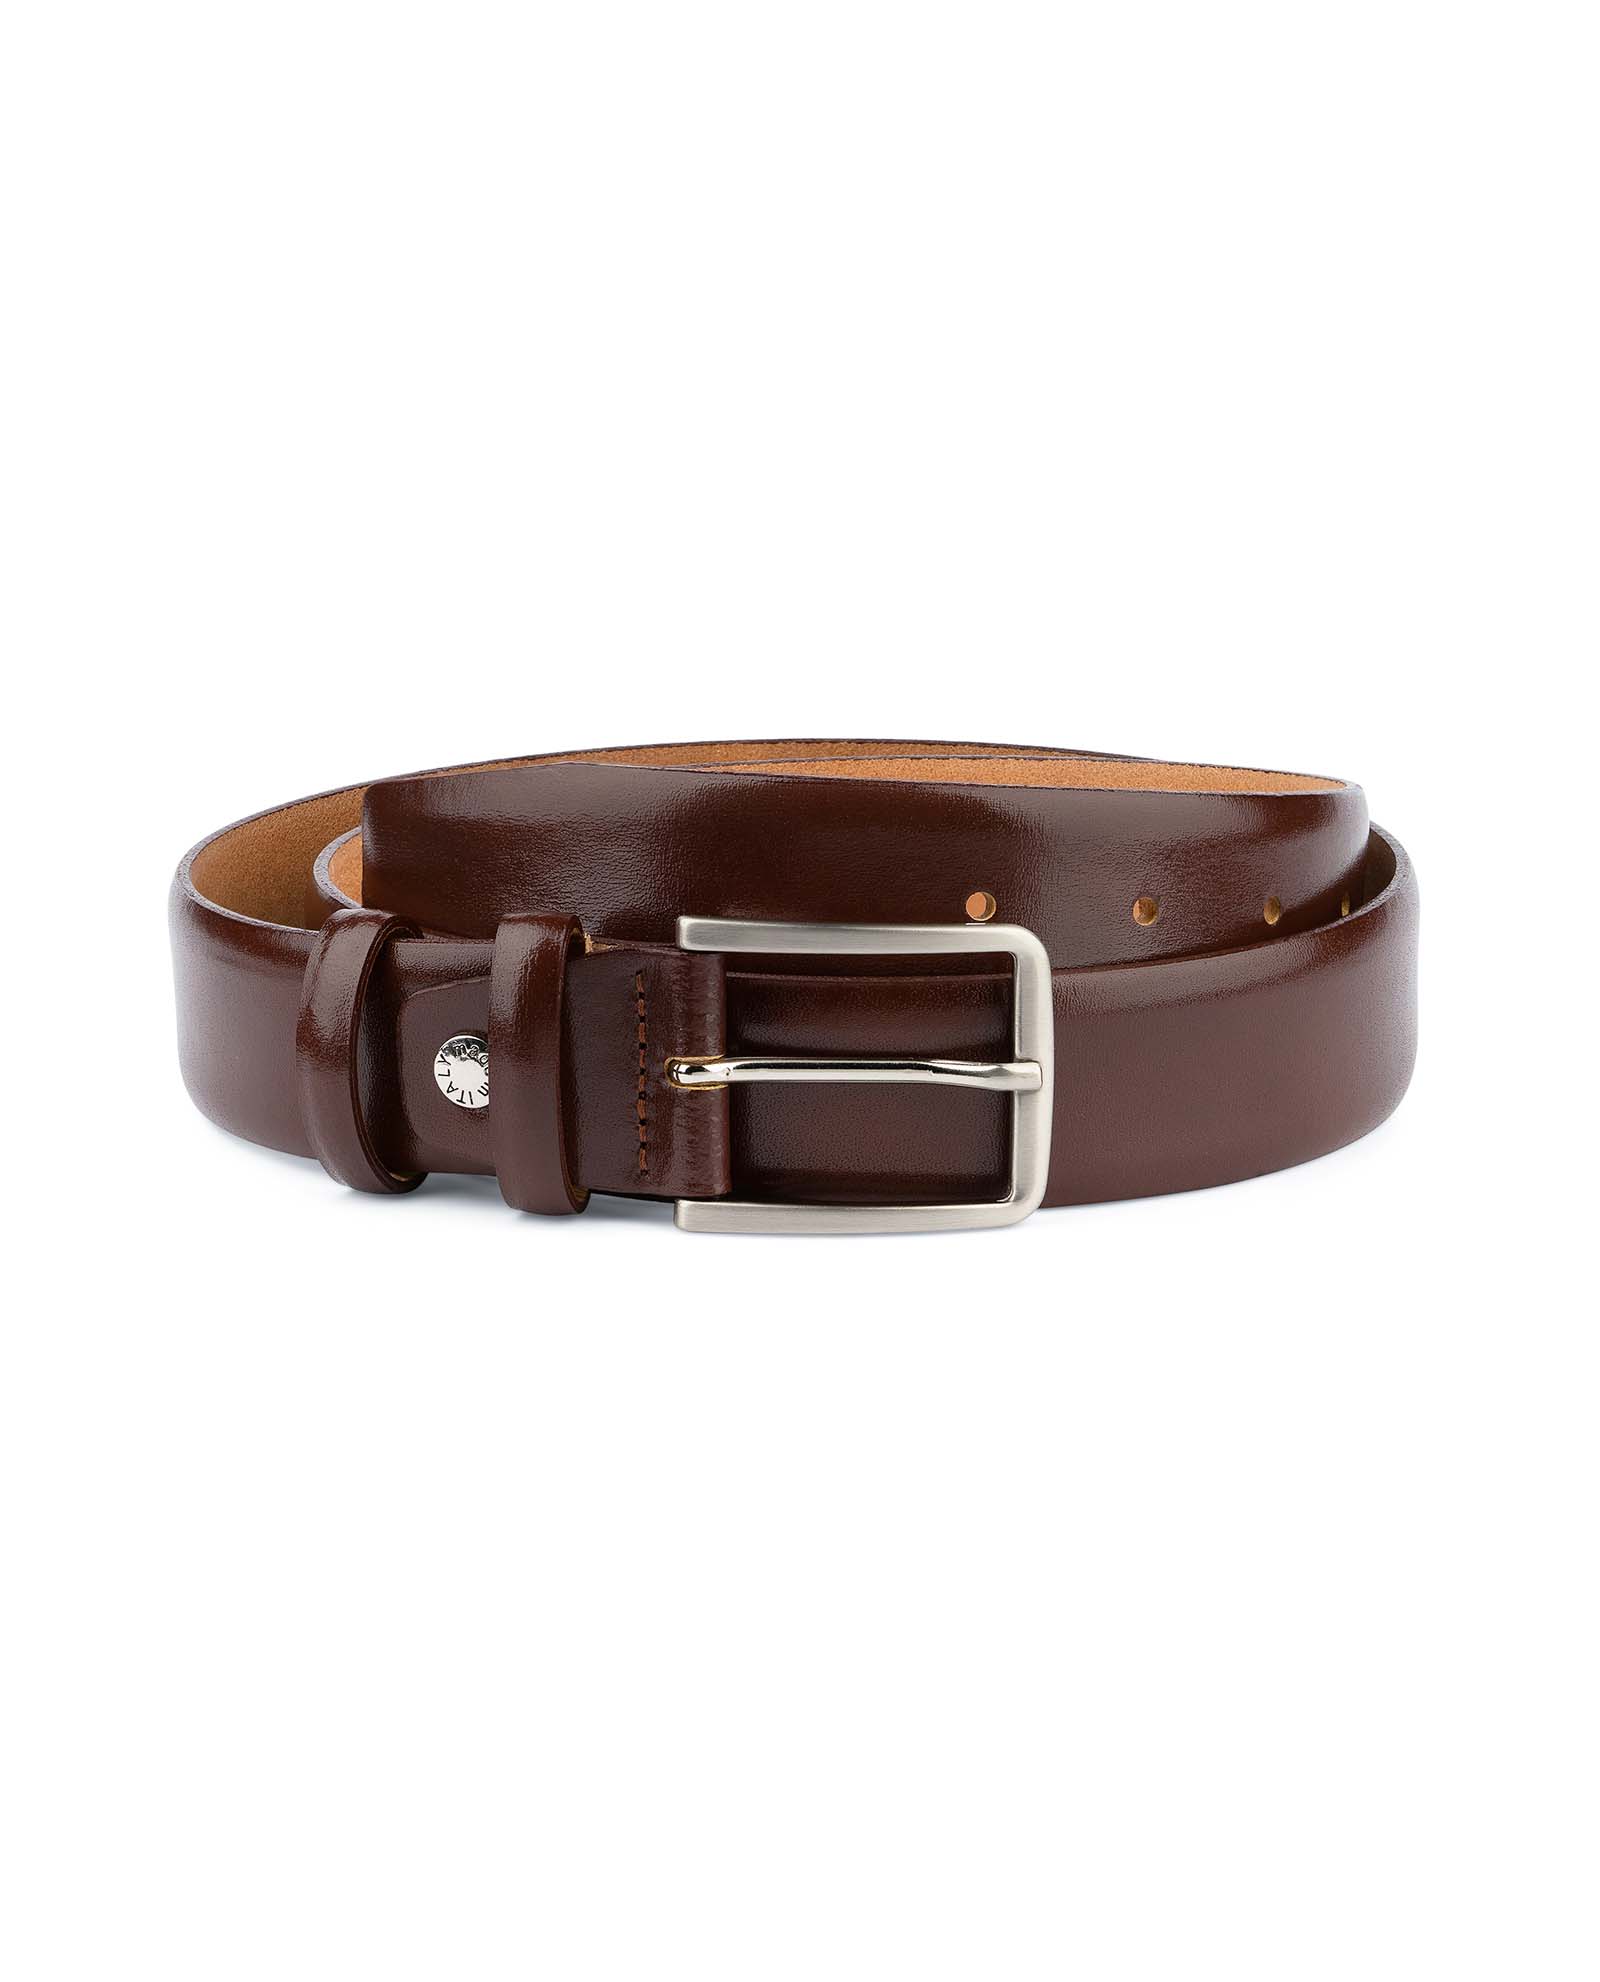 Buy Men's Cognac Belt | Genuine Leather | LeatherBeltsOnline.com